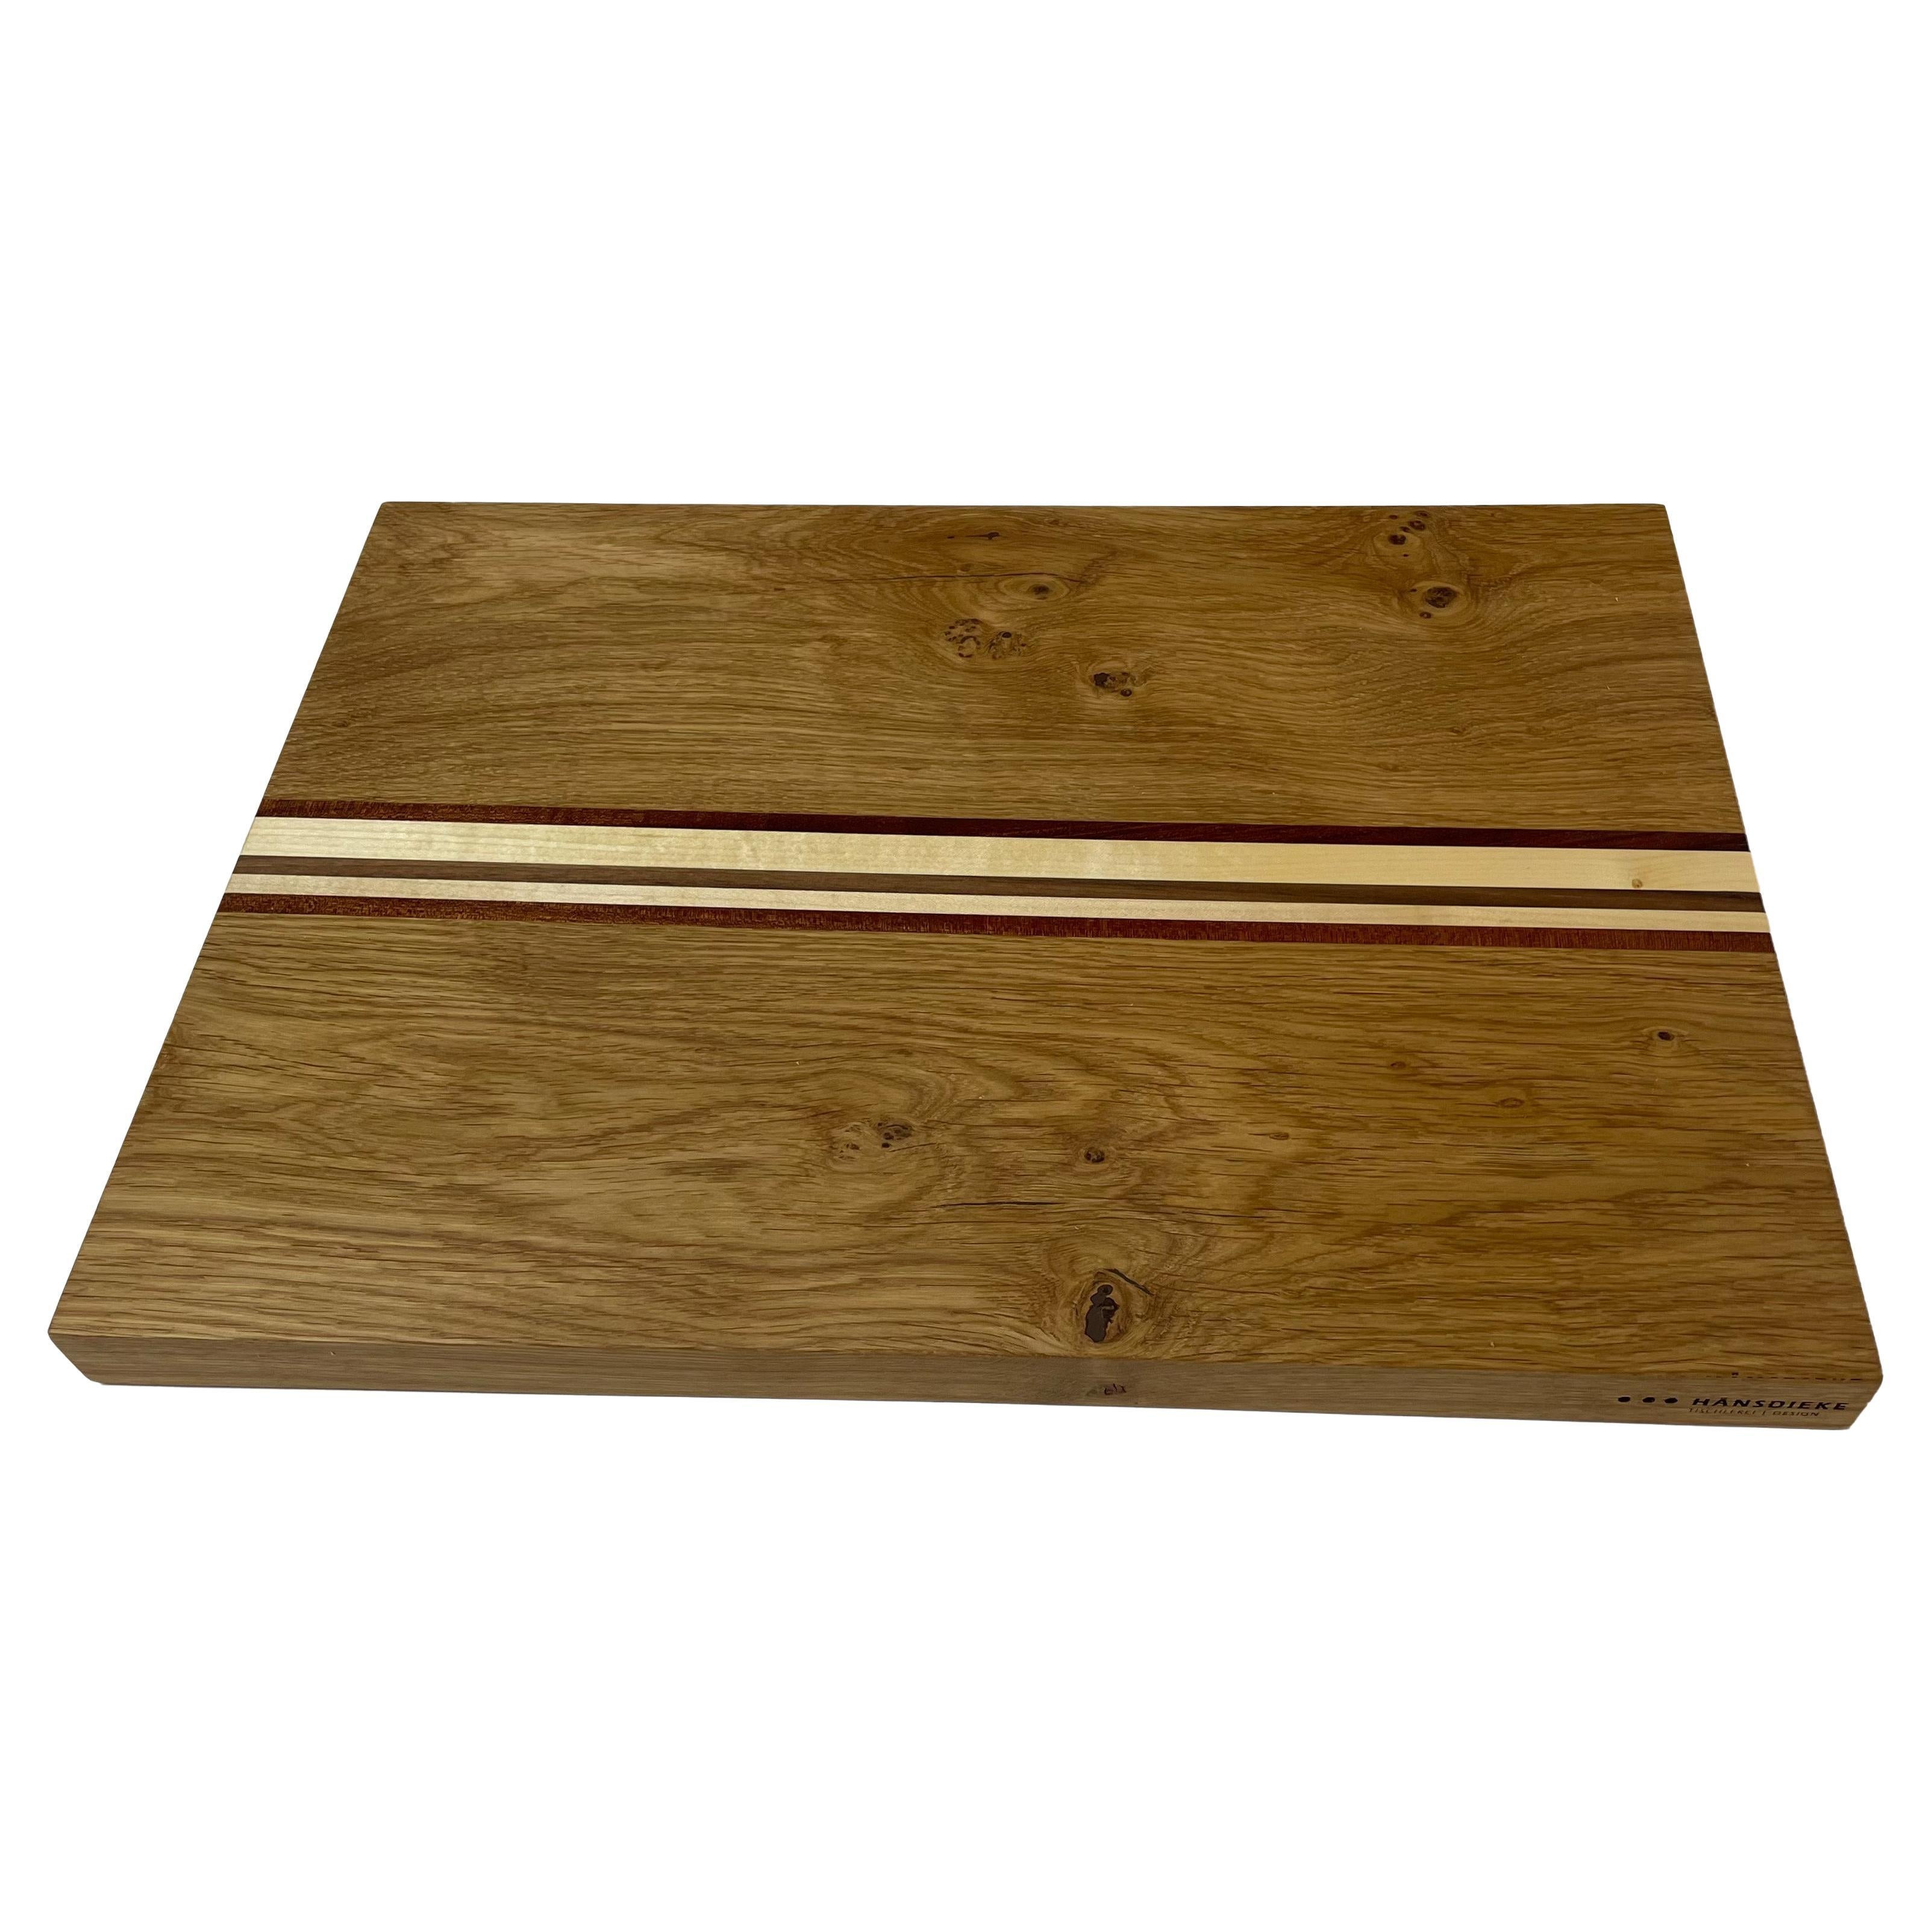 Oak cutting board with embedded wooden sticks